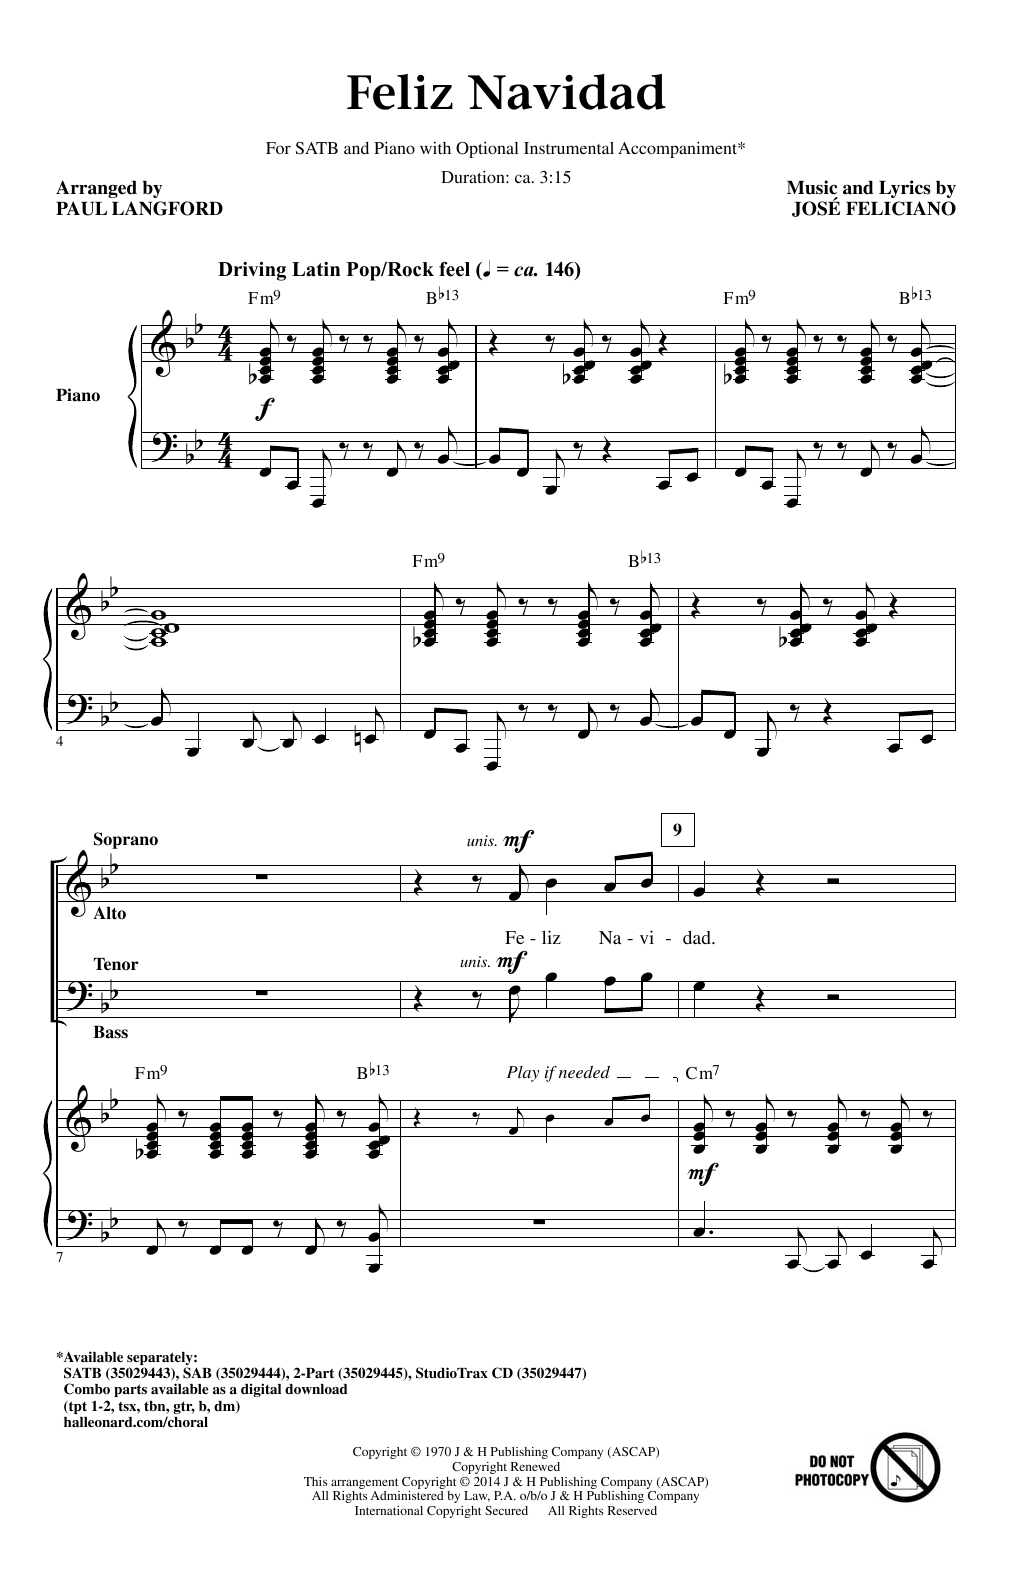 Jose Feliciano Feliz Navidad (arr. Paul Langford) Sheet Music Notes & Chords for SATB Choir - Download or Print PDF